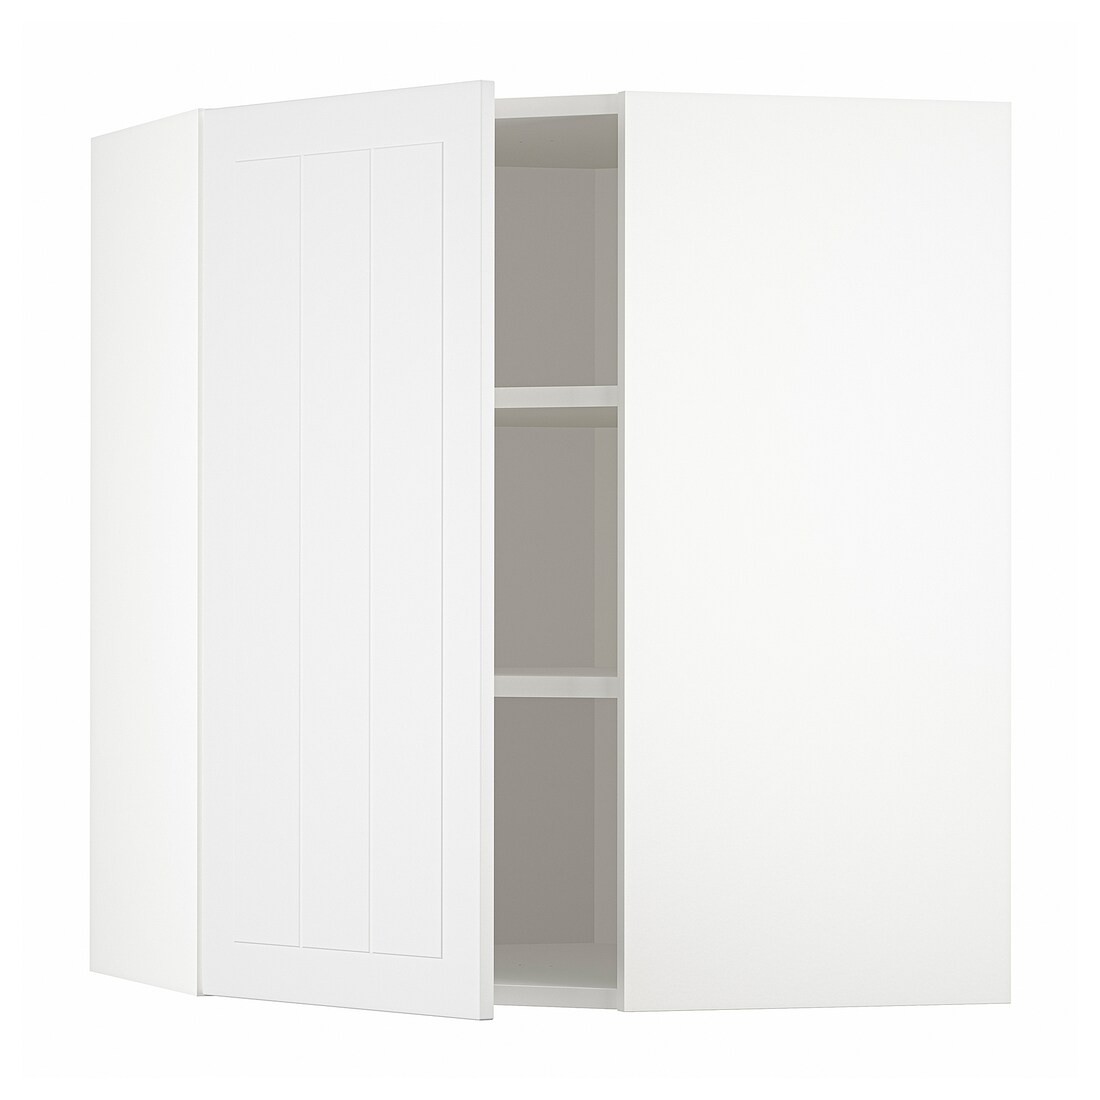 IKEA METOD МЕТОД Угловой навесной шкаф с полками, белый / Stensund белый, 68x80 см 89409199 894.091.99